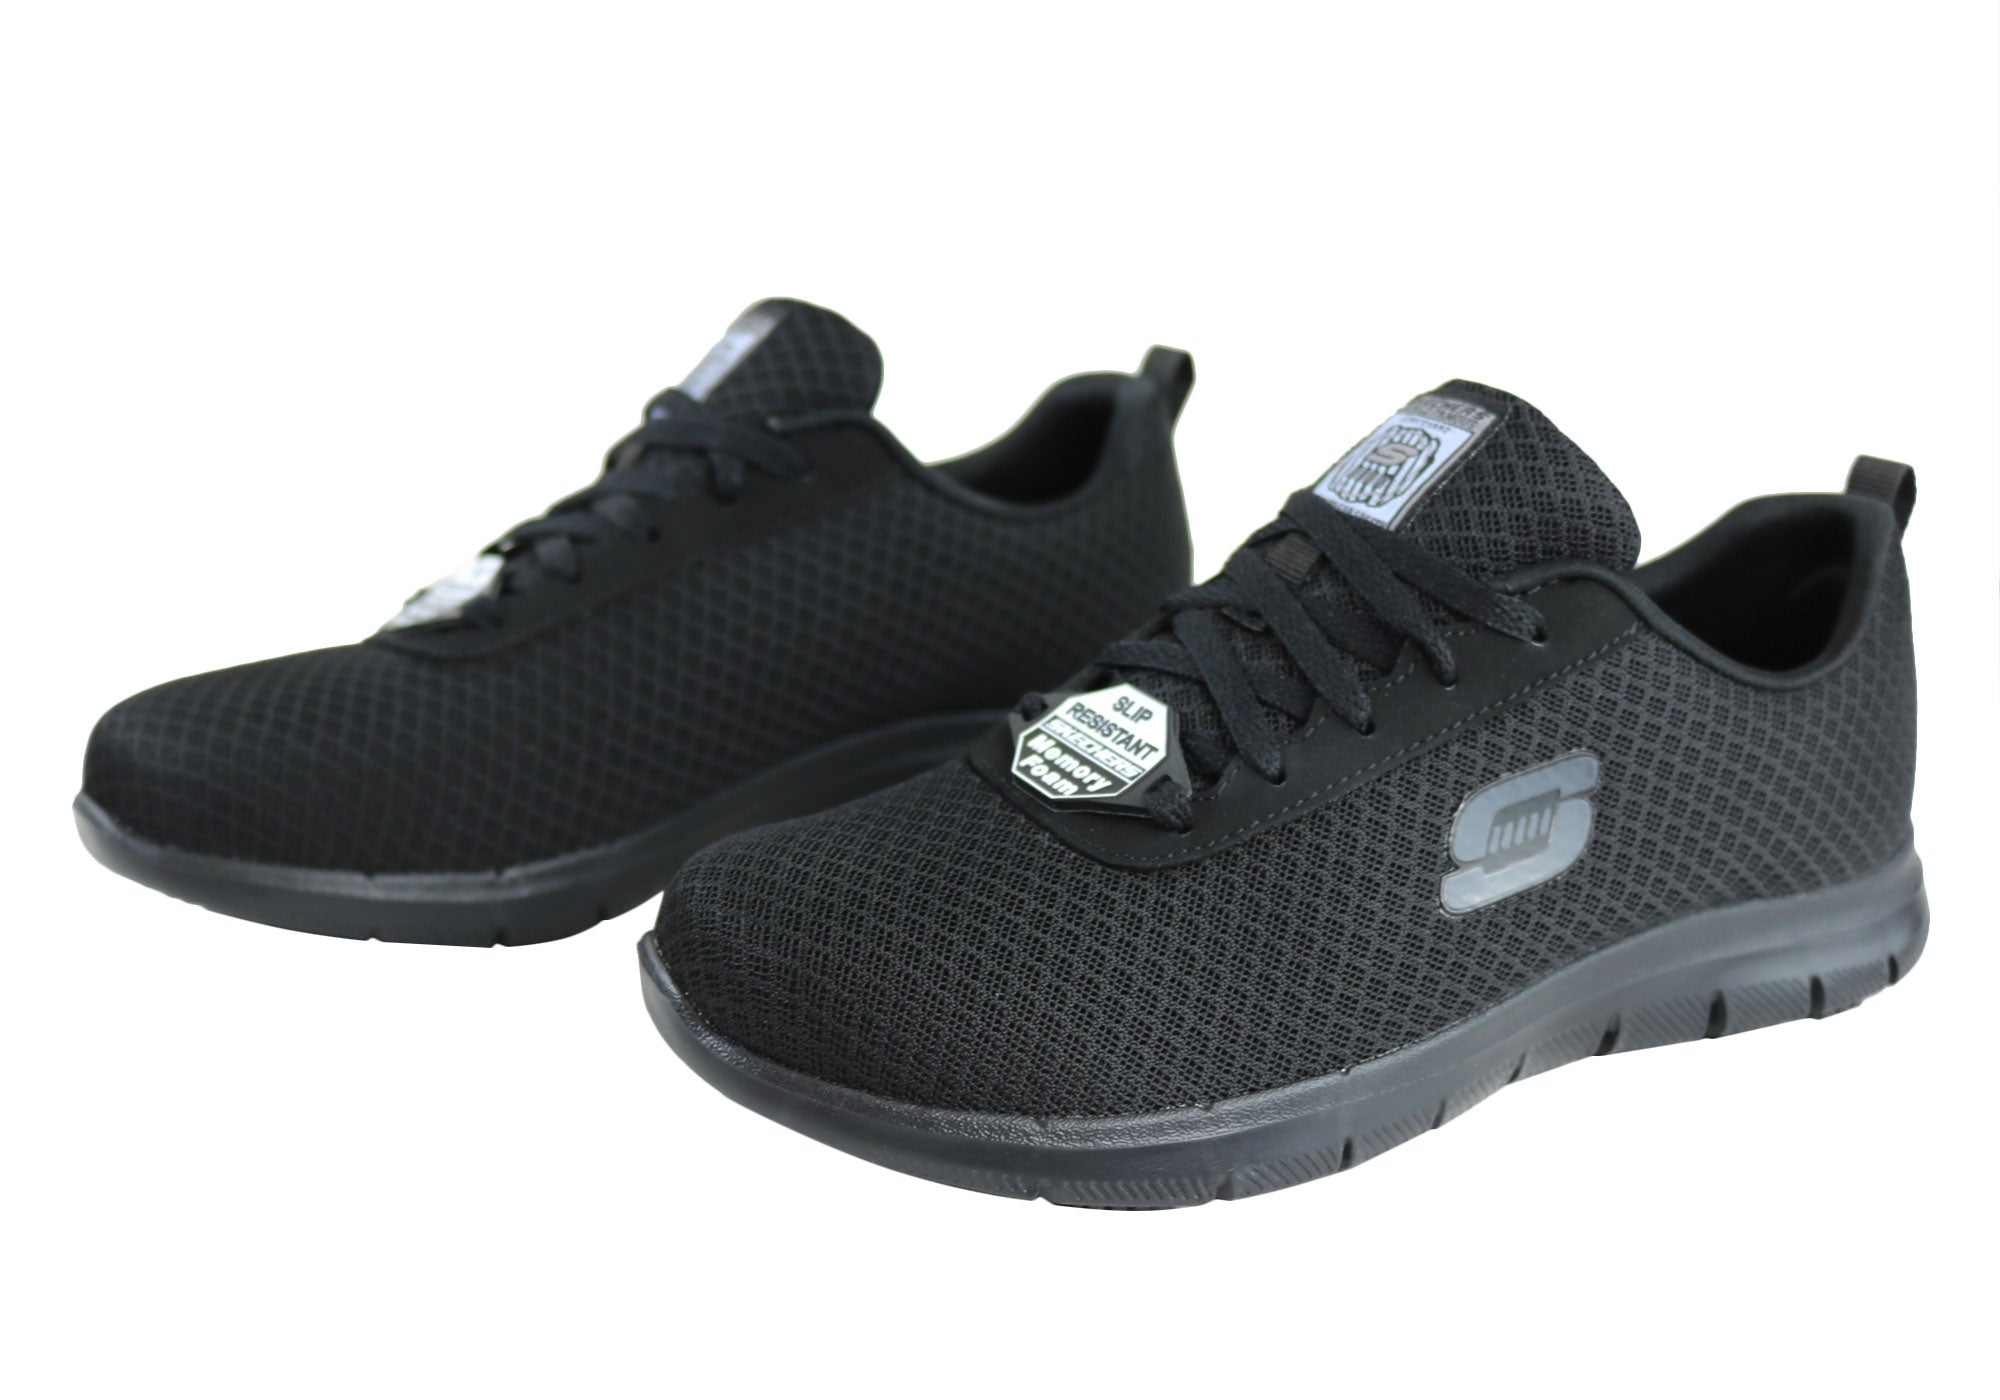 comfortable slip resistant sneakers